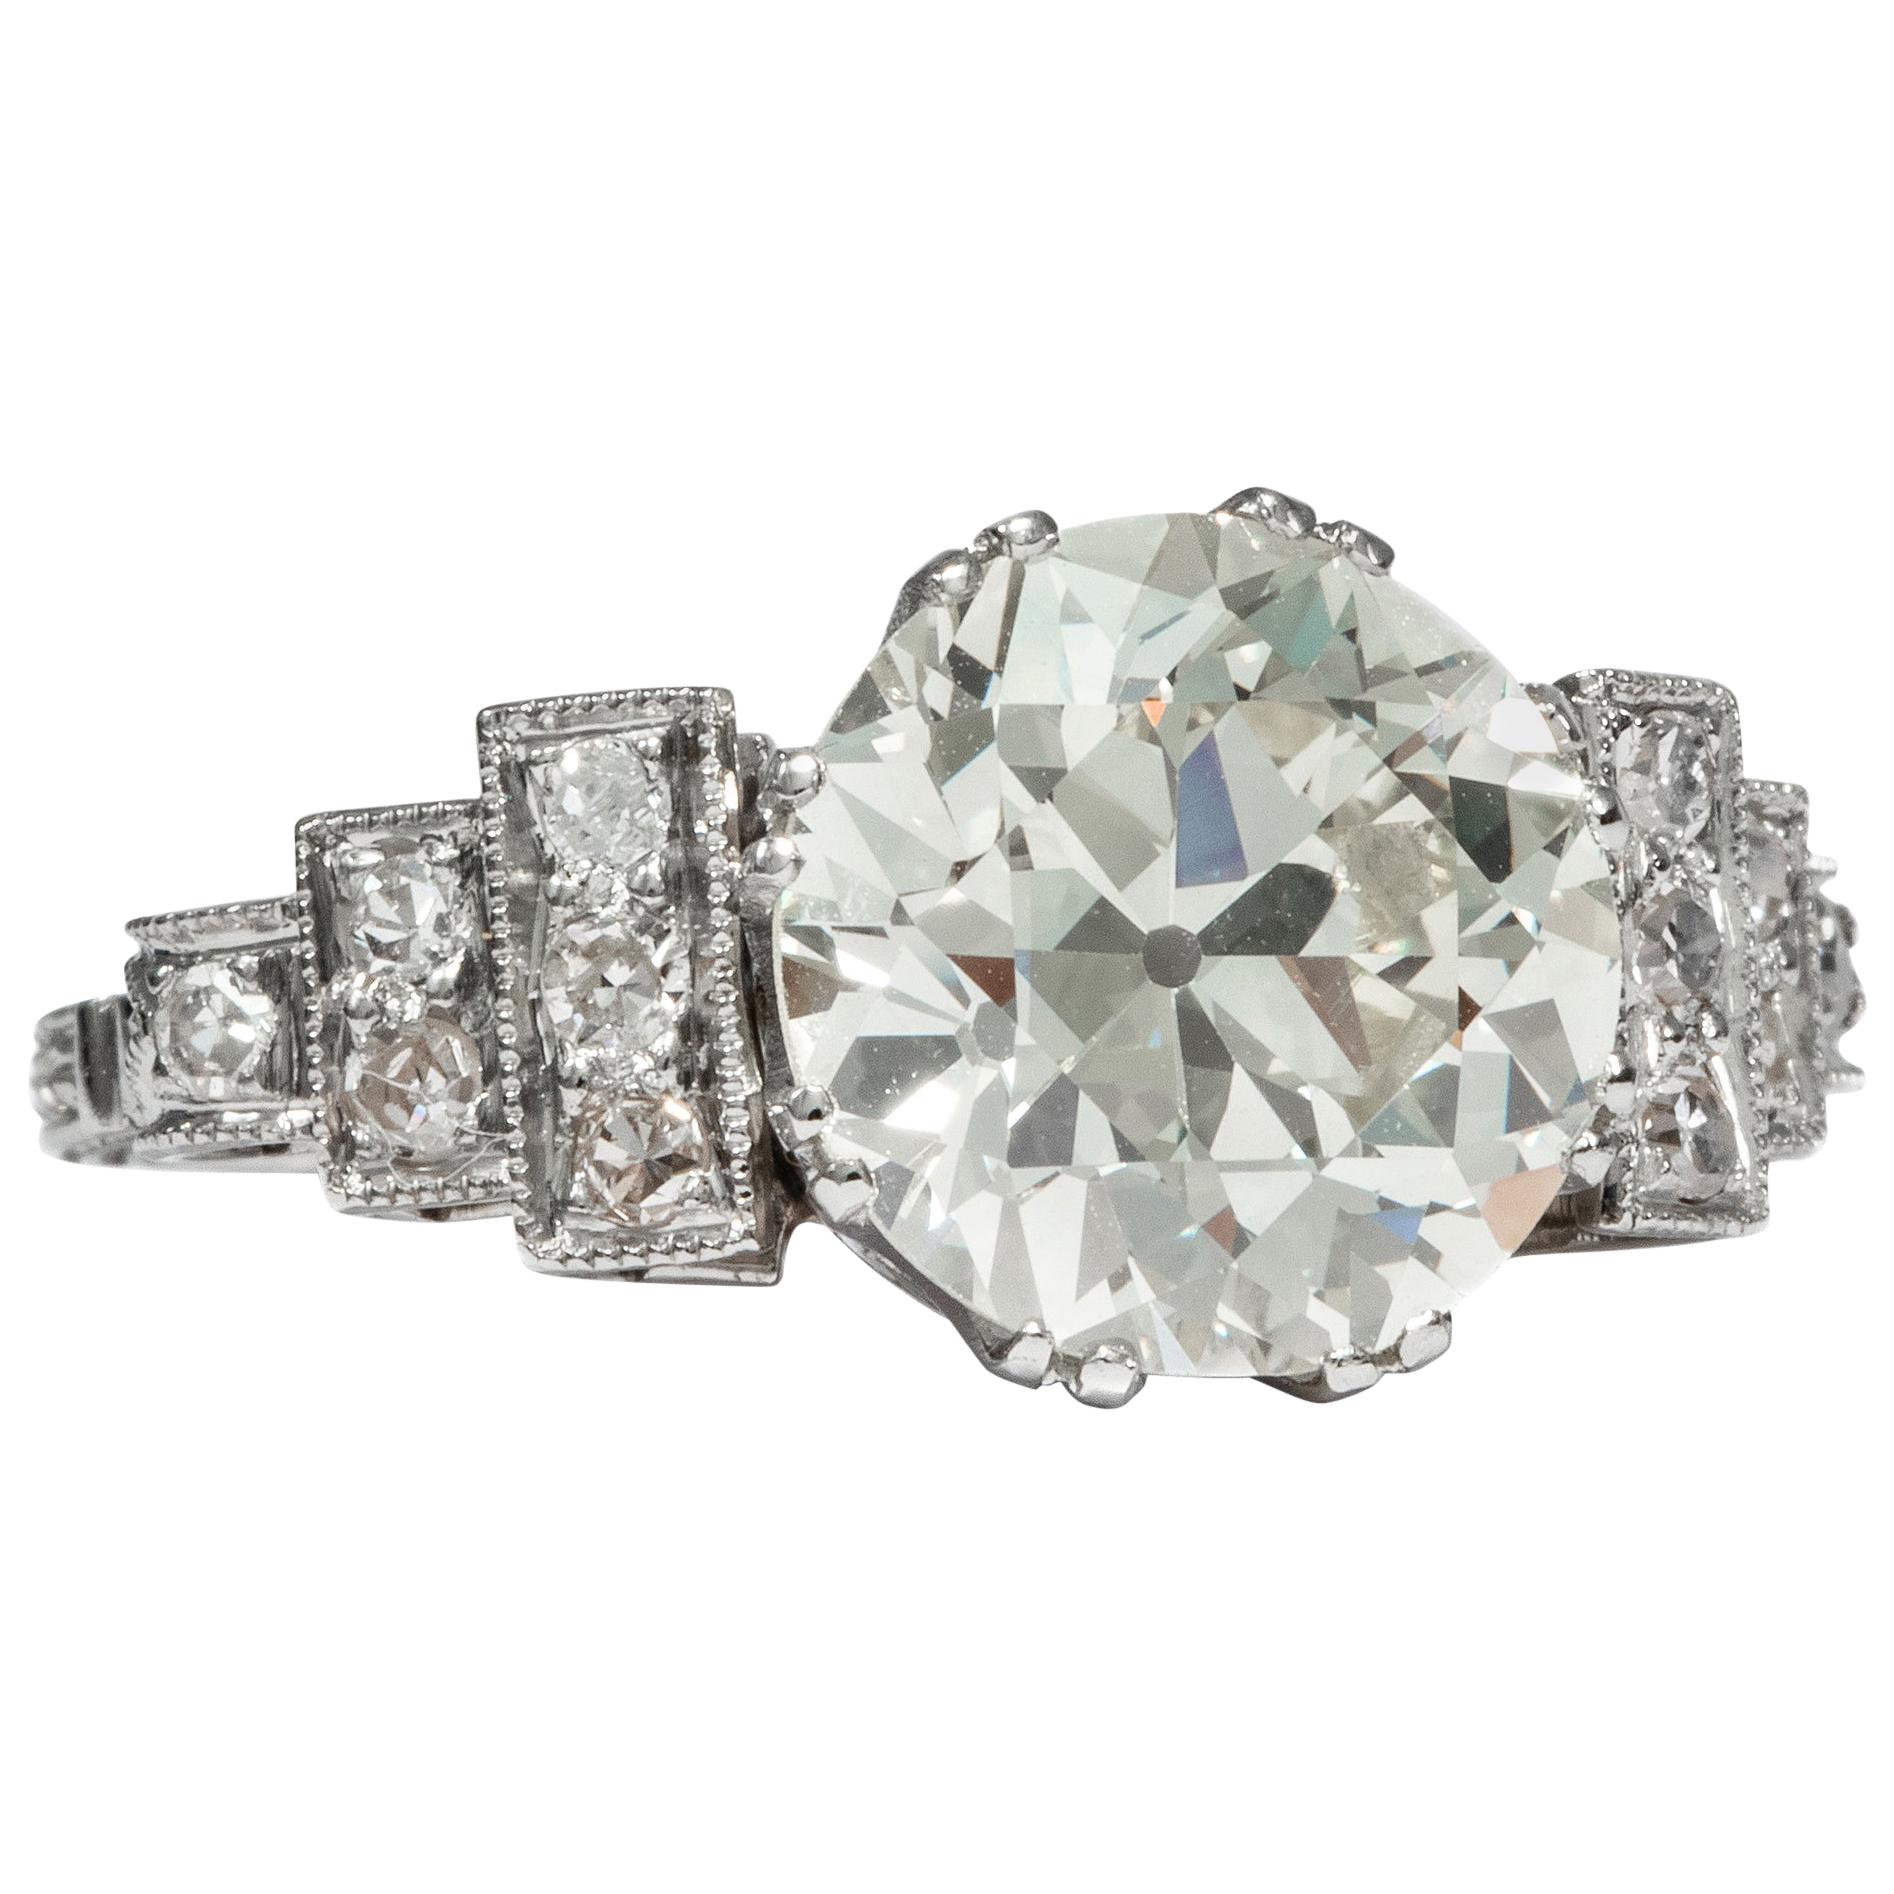 Art Déco circa 1925, Certified 3.99 Carat Diamond Solitaire Engagement Ring